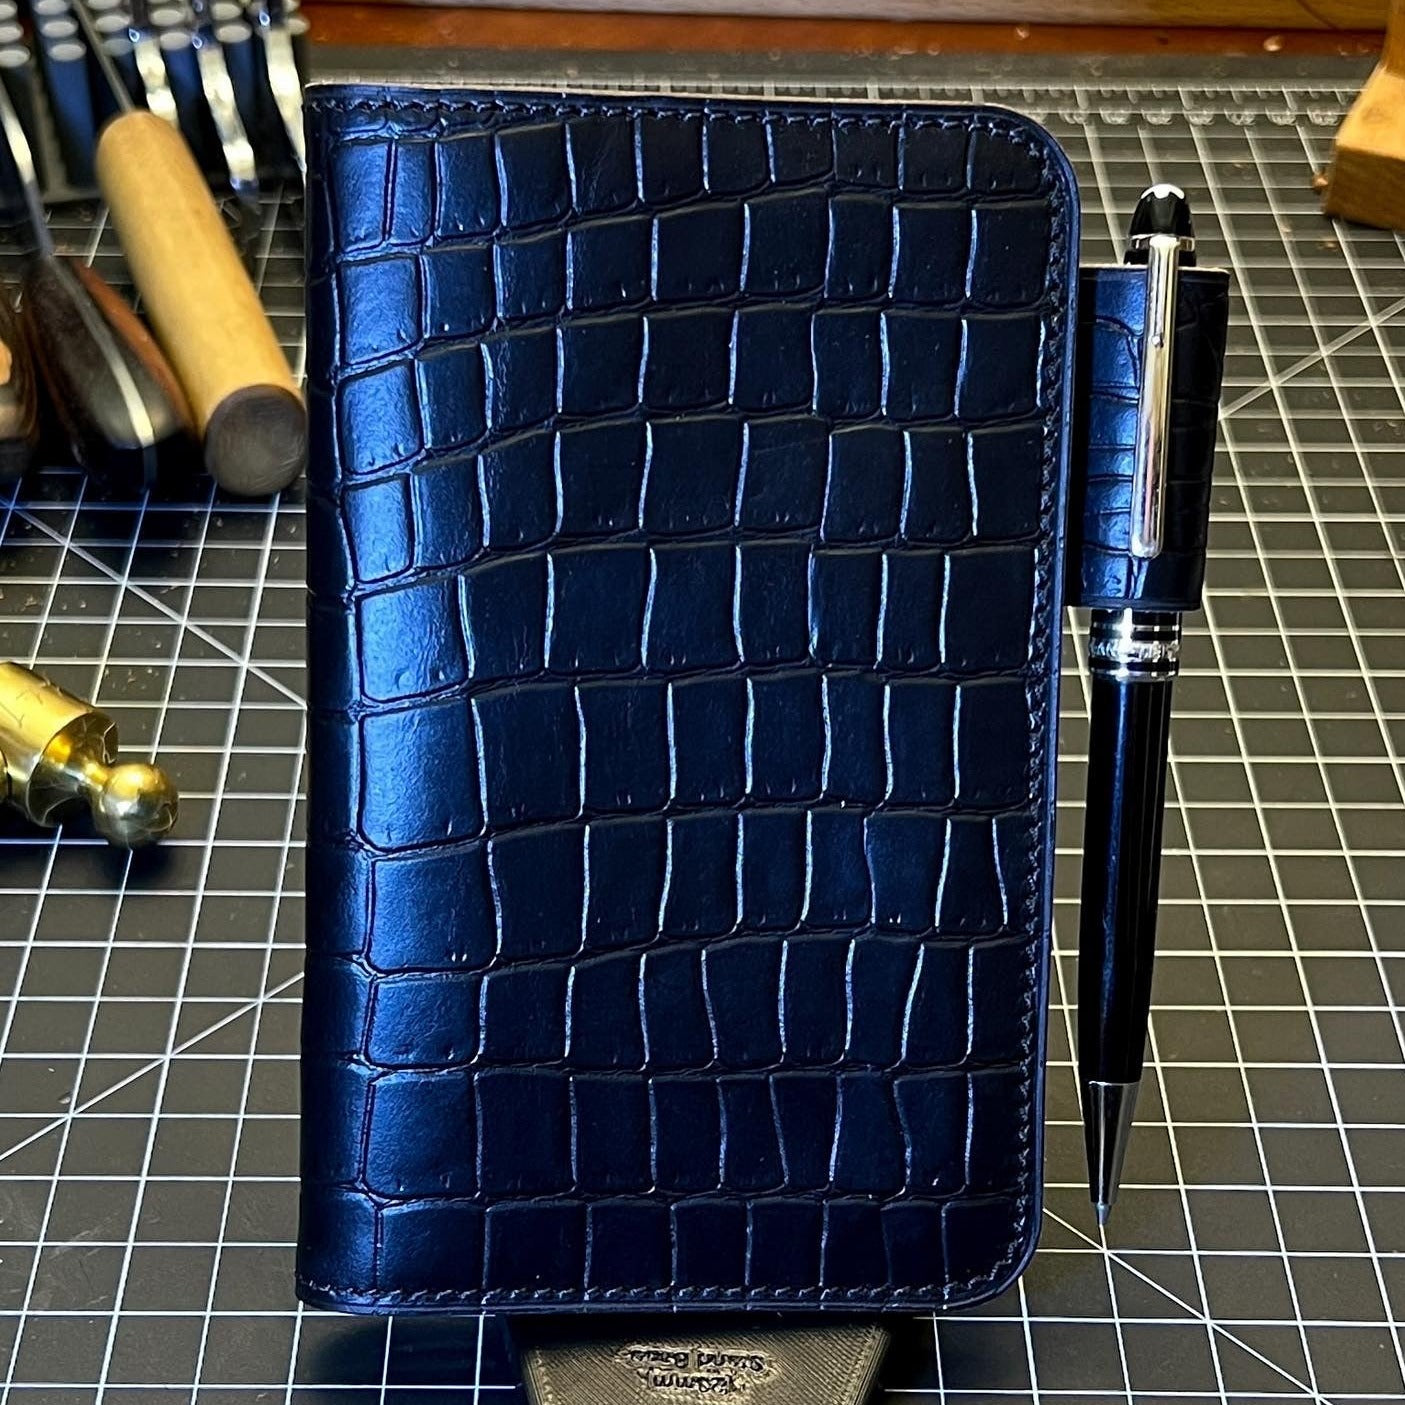 Custom Handmade Field Notes Journal Covers with Pen Loop in Black CXL Crocodile Print Leather | Handmade in Houston | Custom Leather and Pen